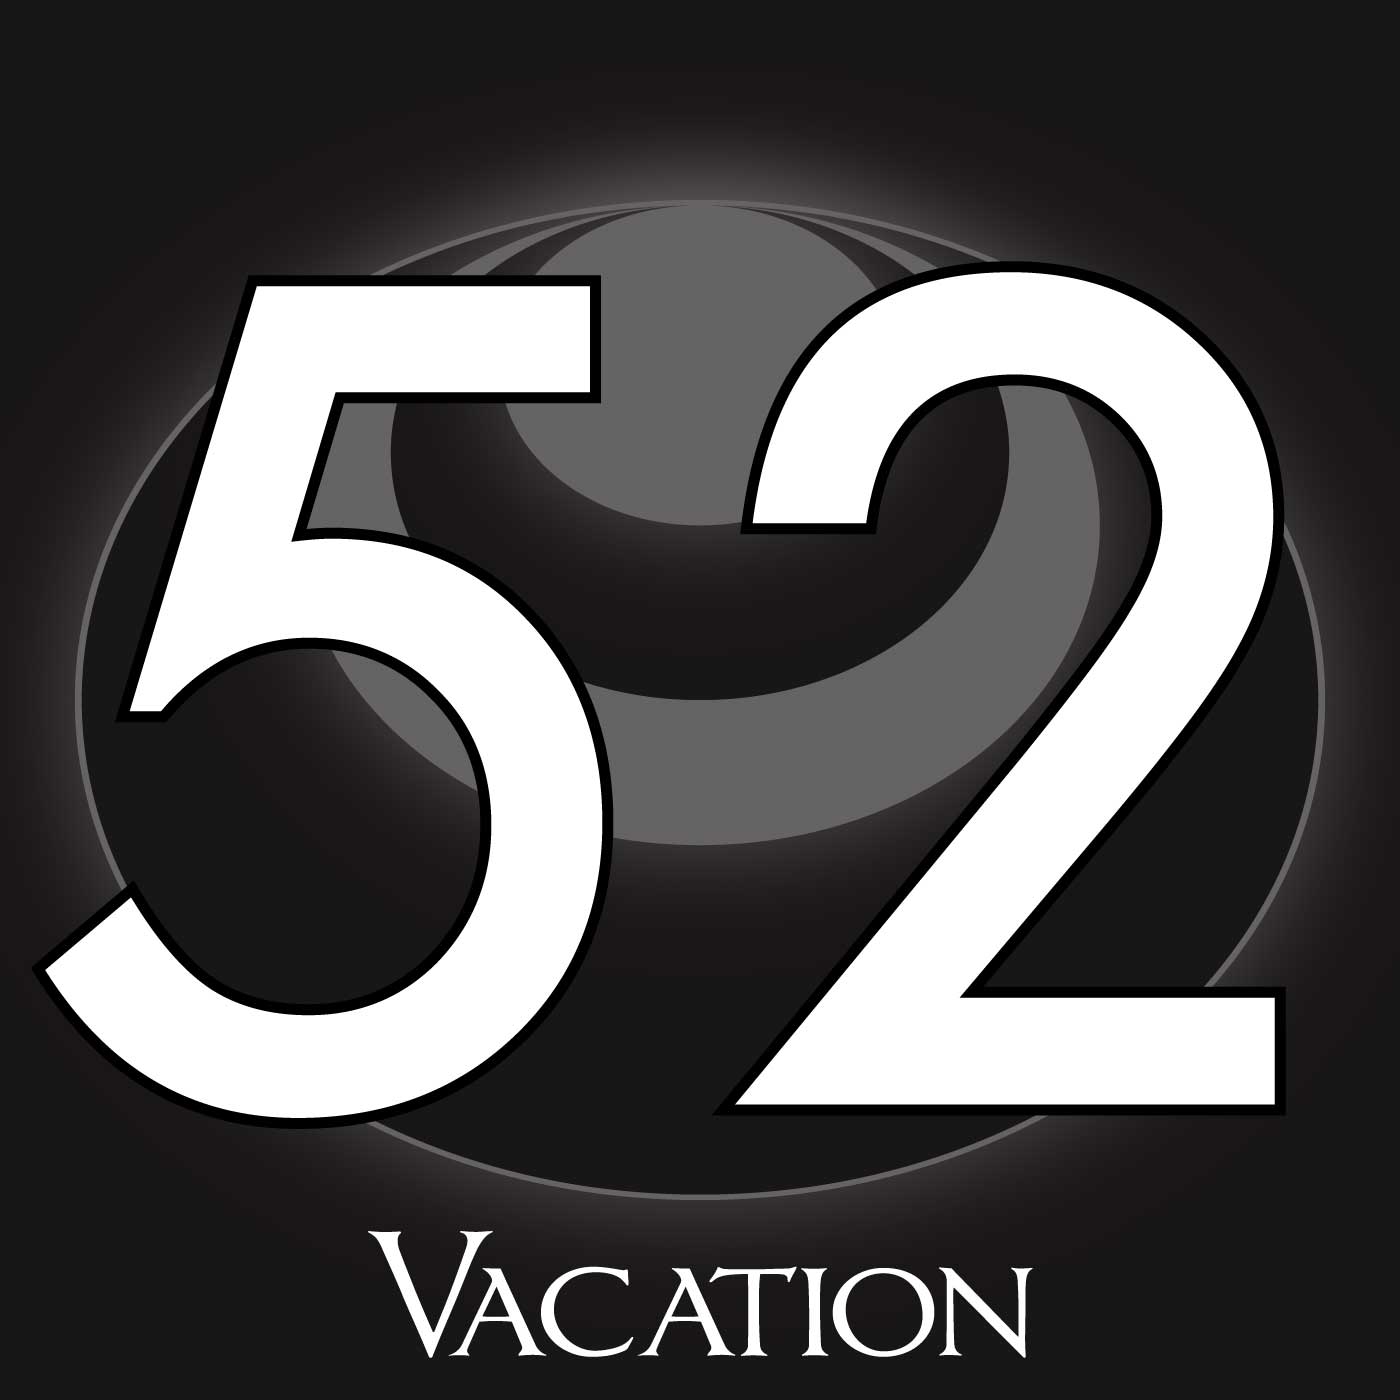 52 – Vacation